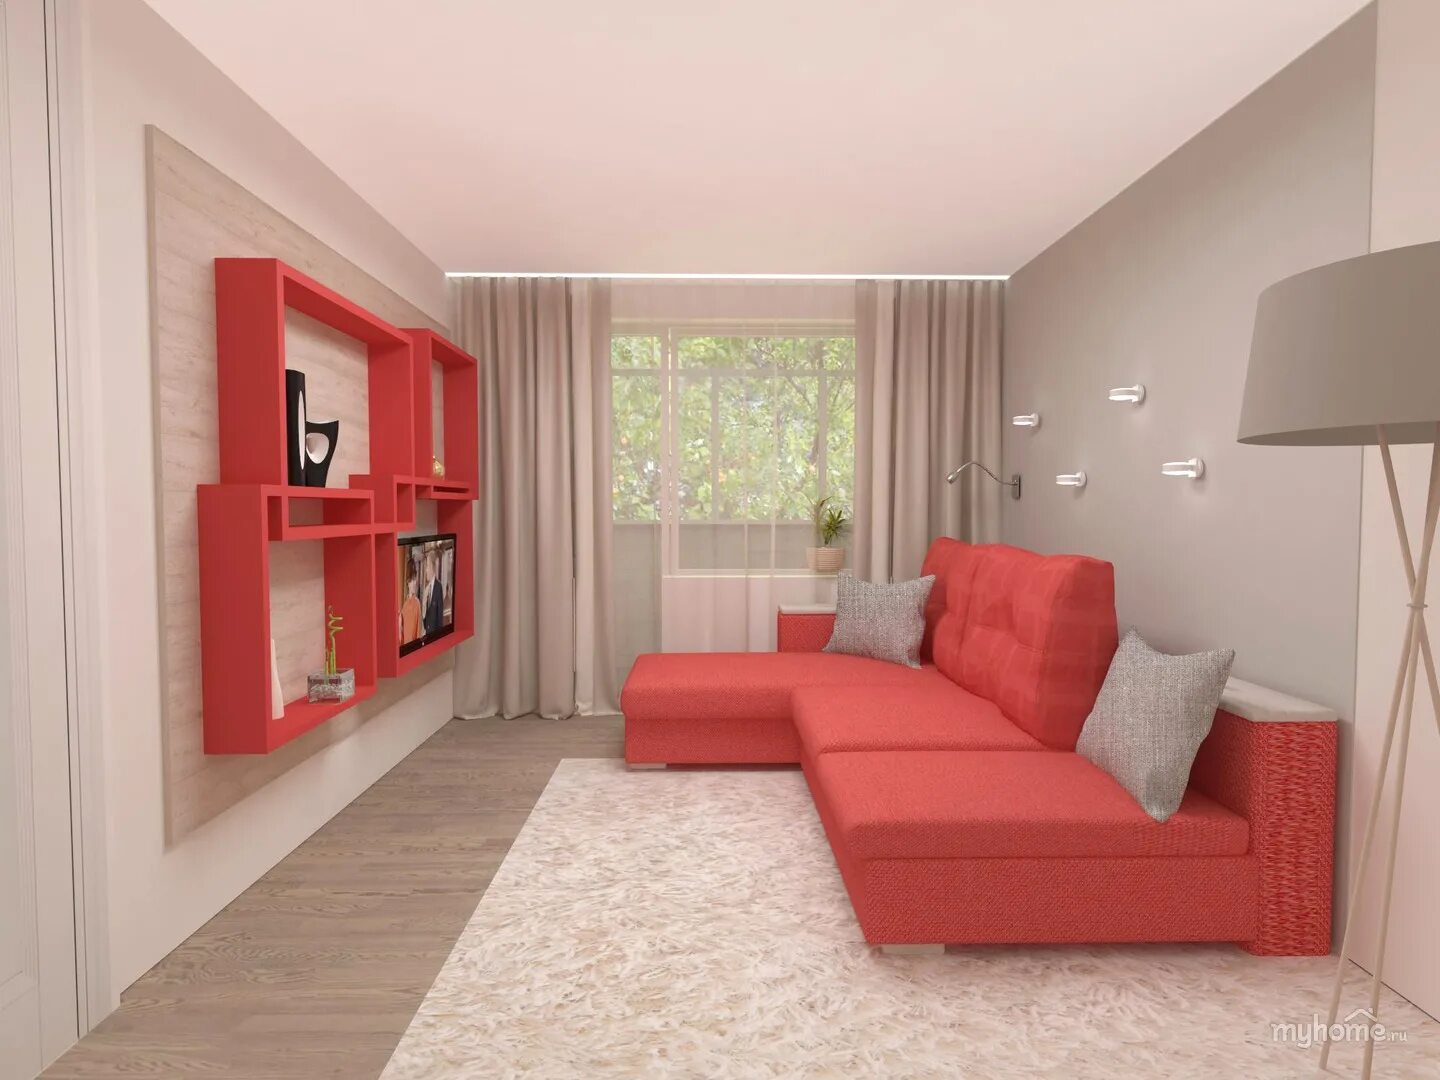 Интерьер комнаты с красным диваном. Интерьер однокомнатной квартиры в Красном. Интерьер комнаты в однокомнатной квартире. Красный диван в интерьере маленькой комнаты.